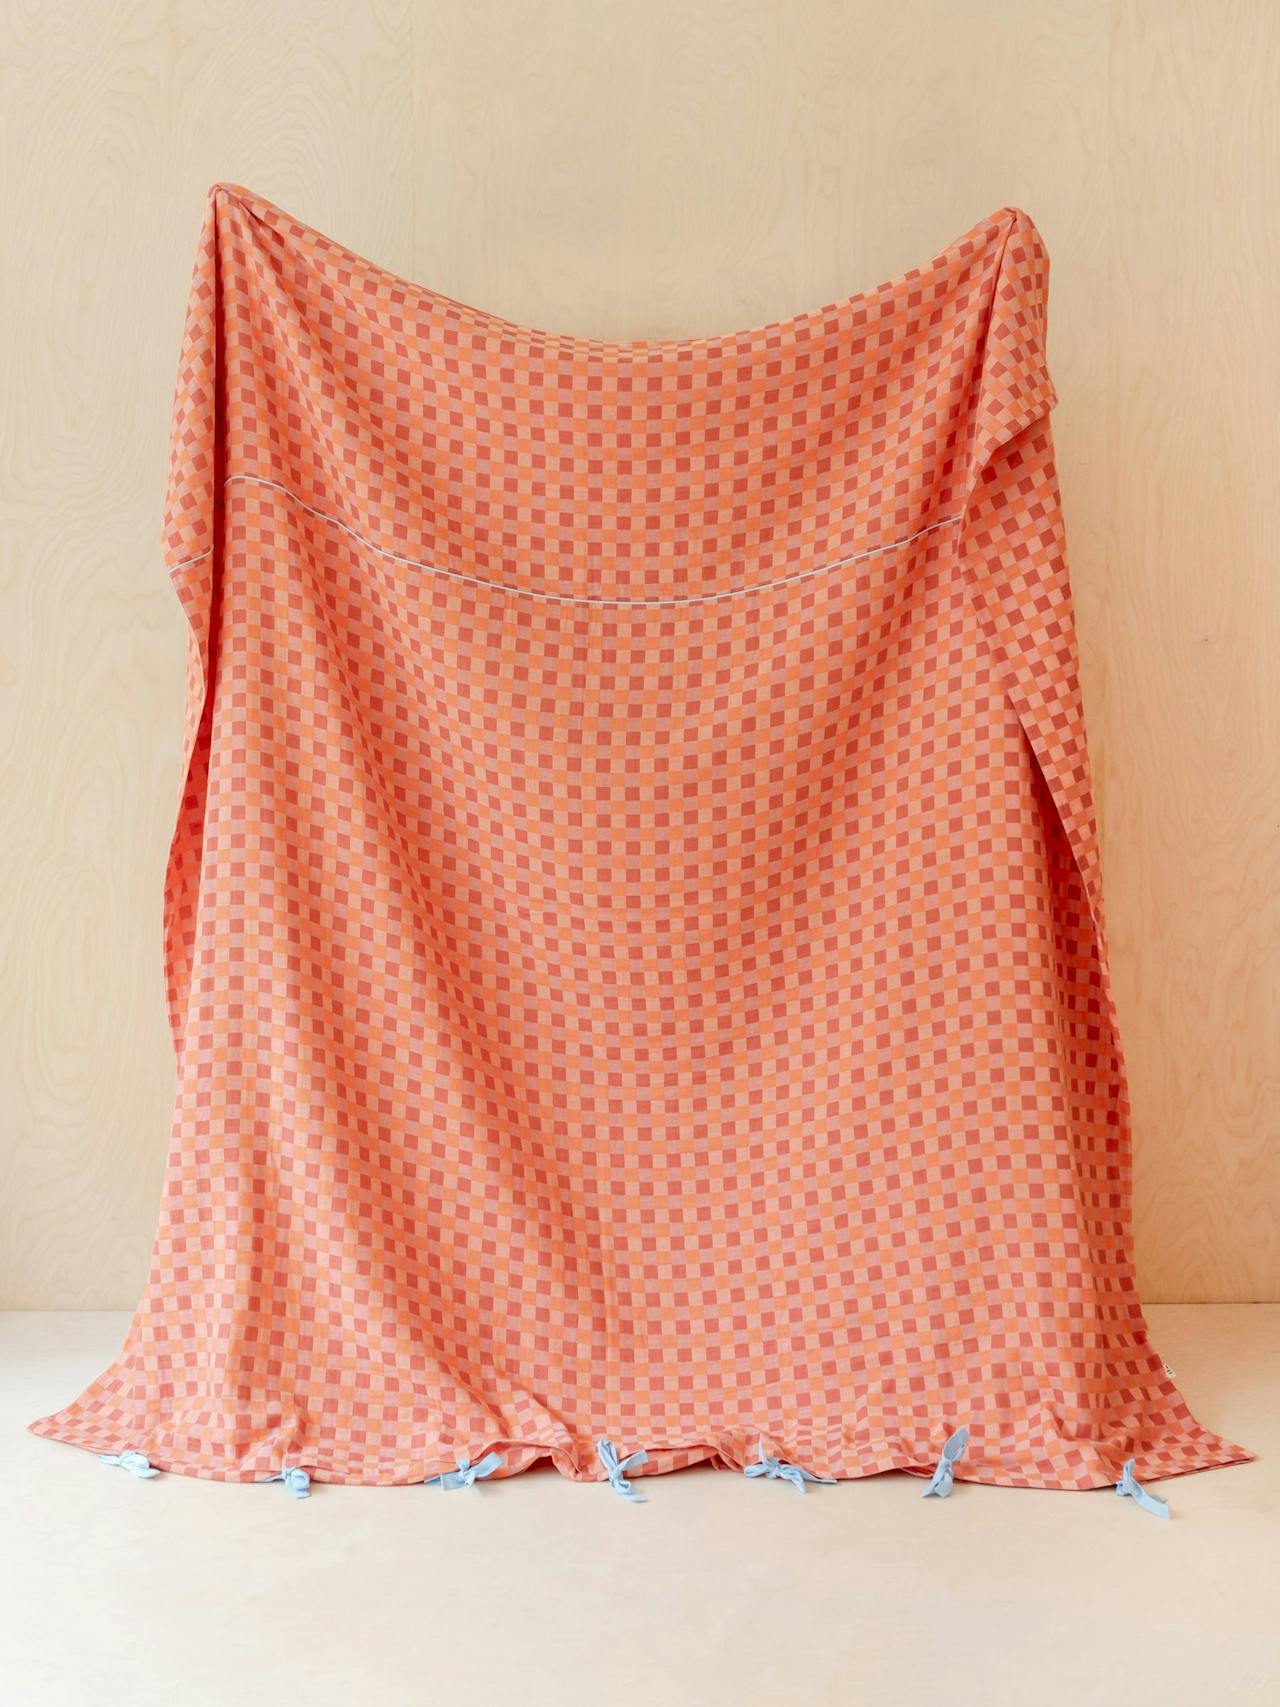 Cotton duvet cover in apricot checkerboard